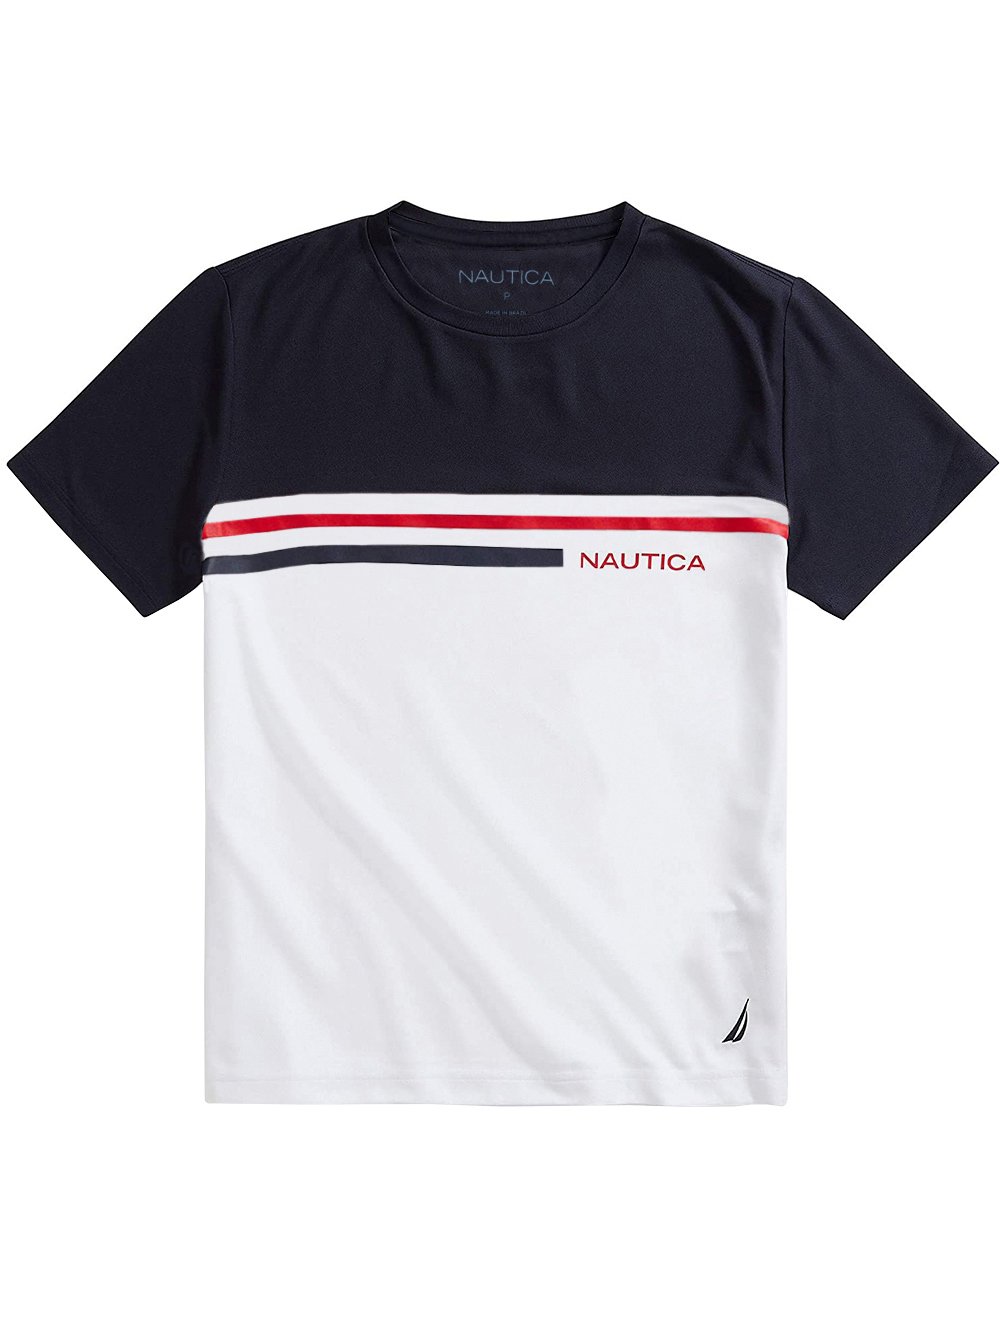 Camiseta Nautica Masculina Colorblock Marinho e Branca